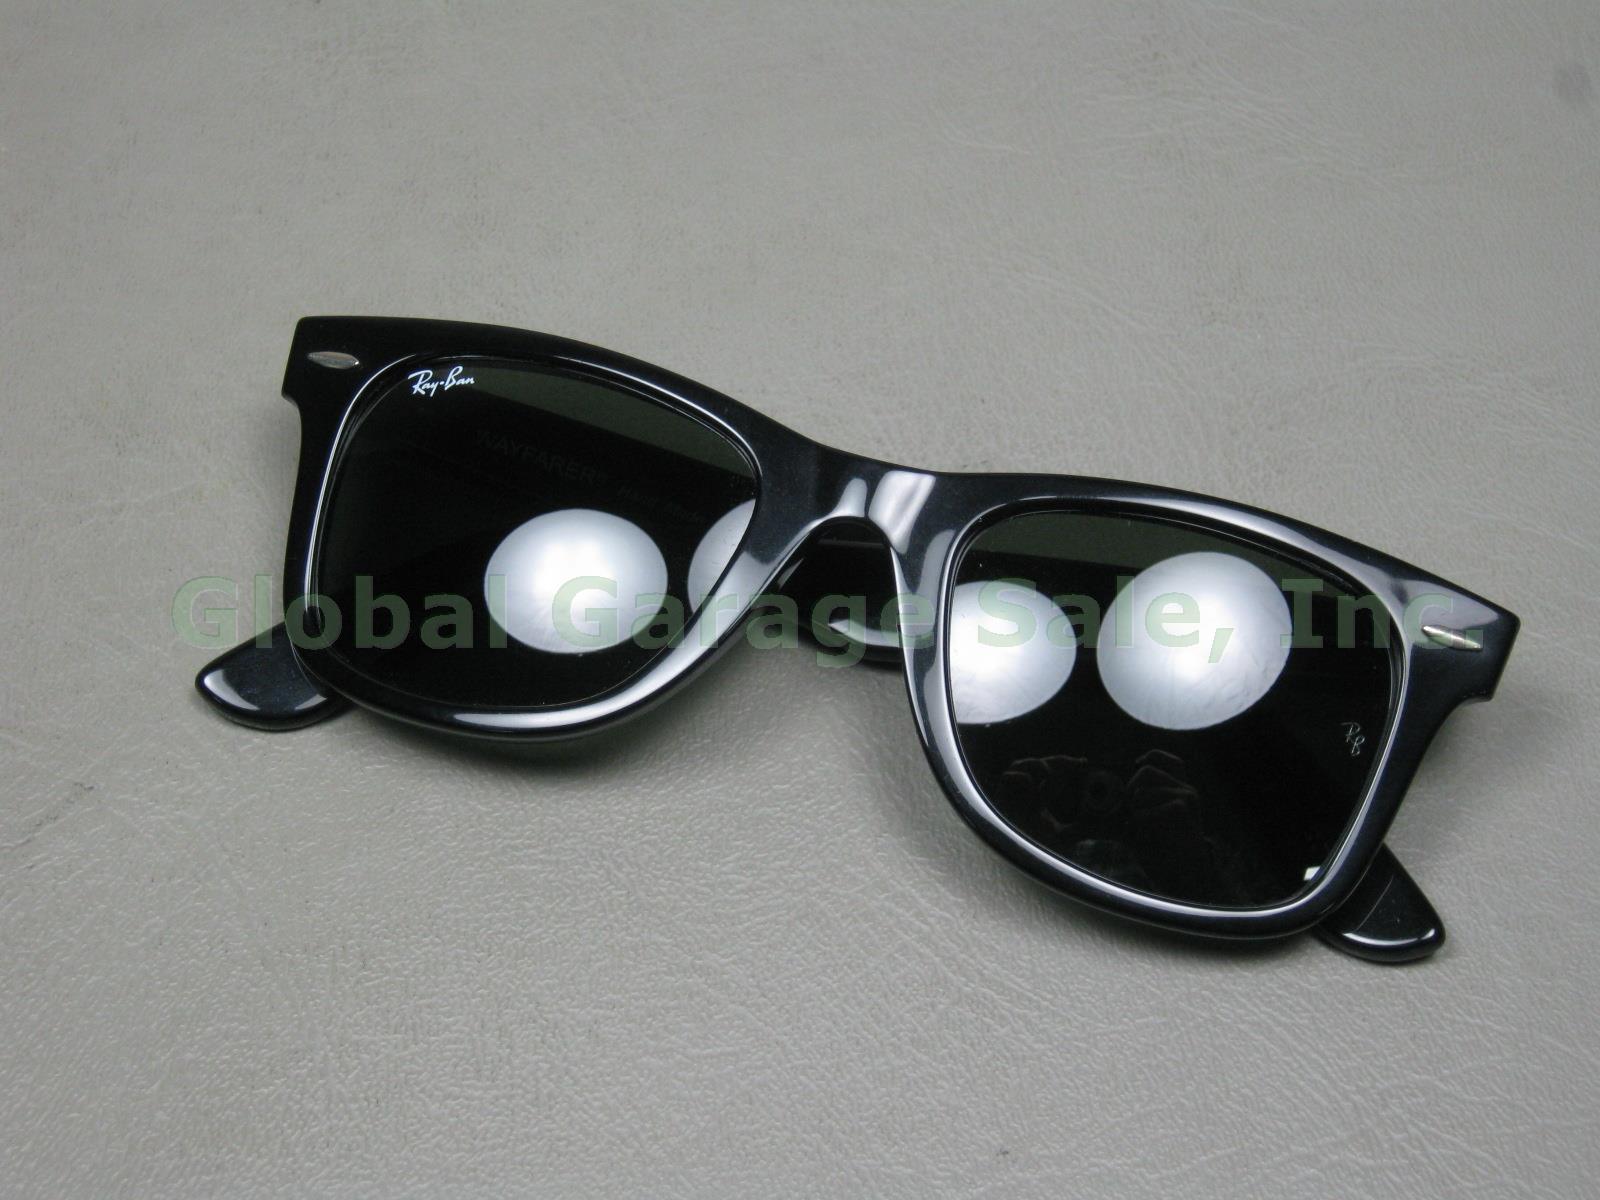 NOS Black Ray Ban Original Wayfarer Classics RB2140 Sunglasses + Case Bundle Lot 1